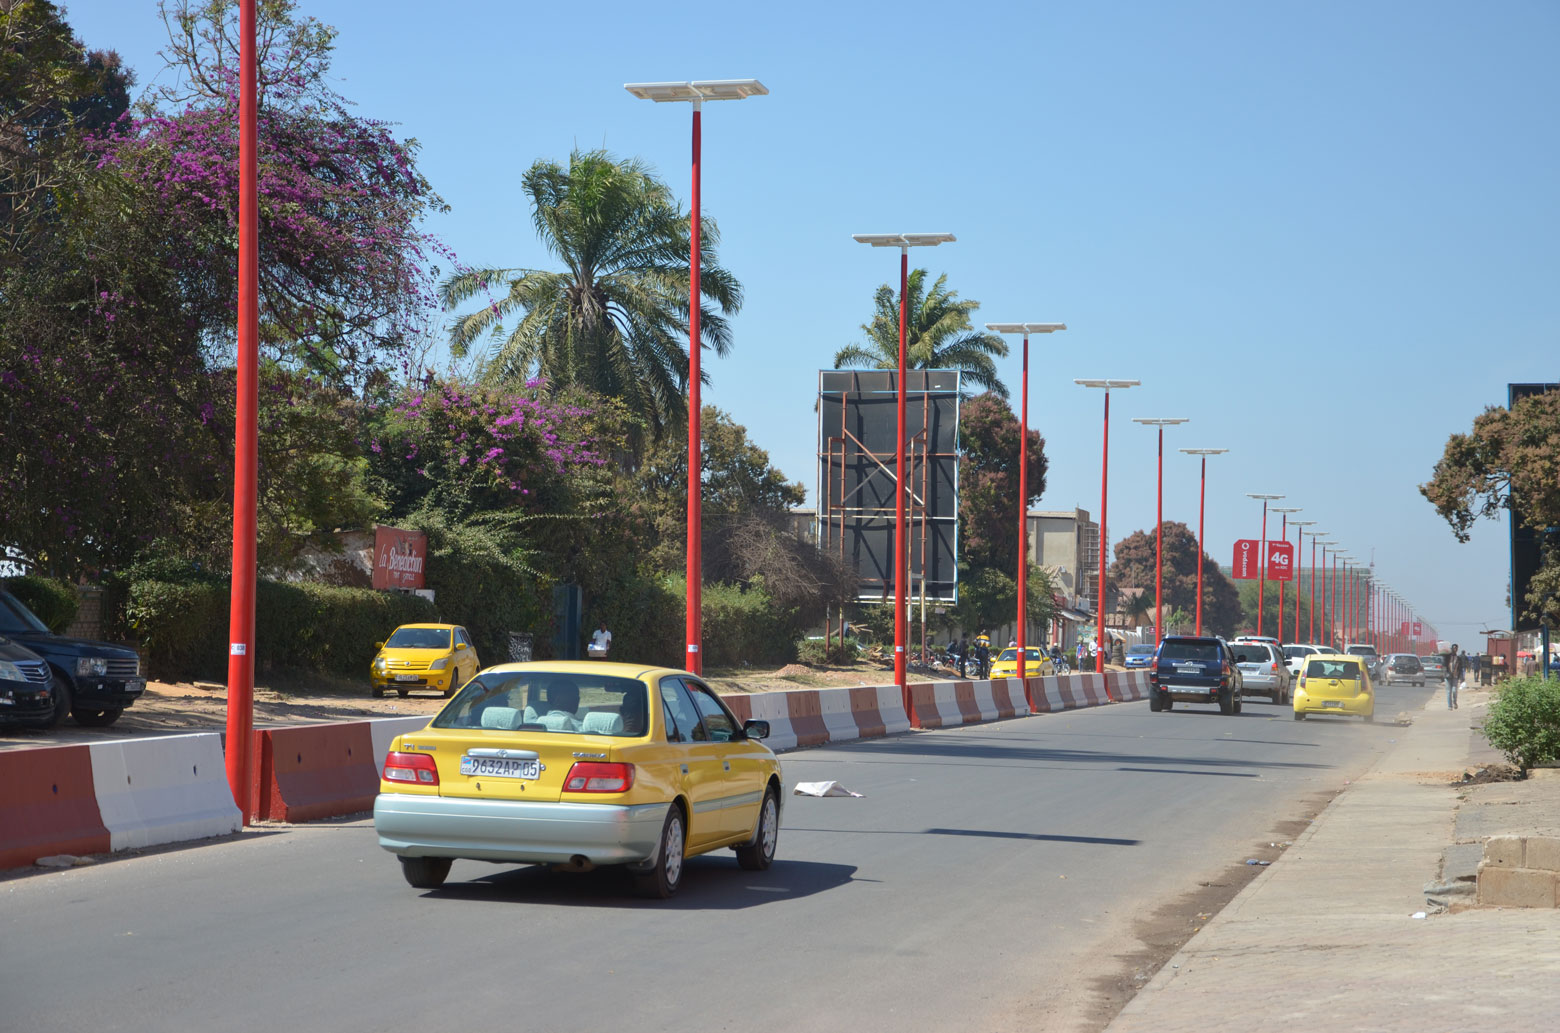 Kasa-Vubu avenue in Lubumbashi after renovation in 2019